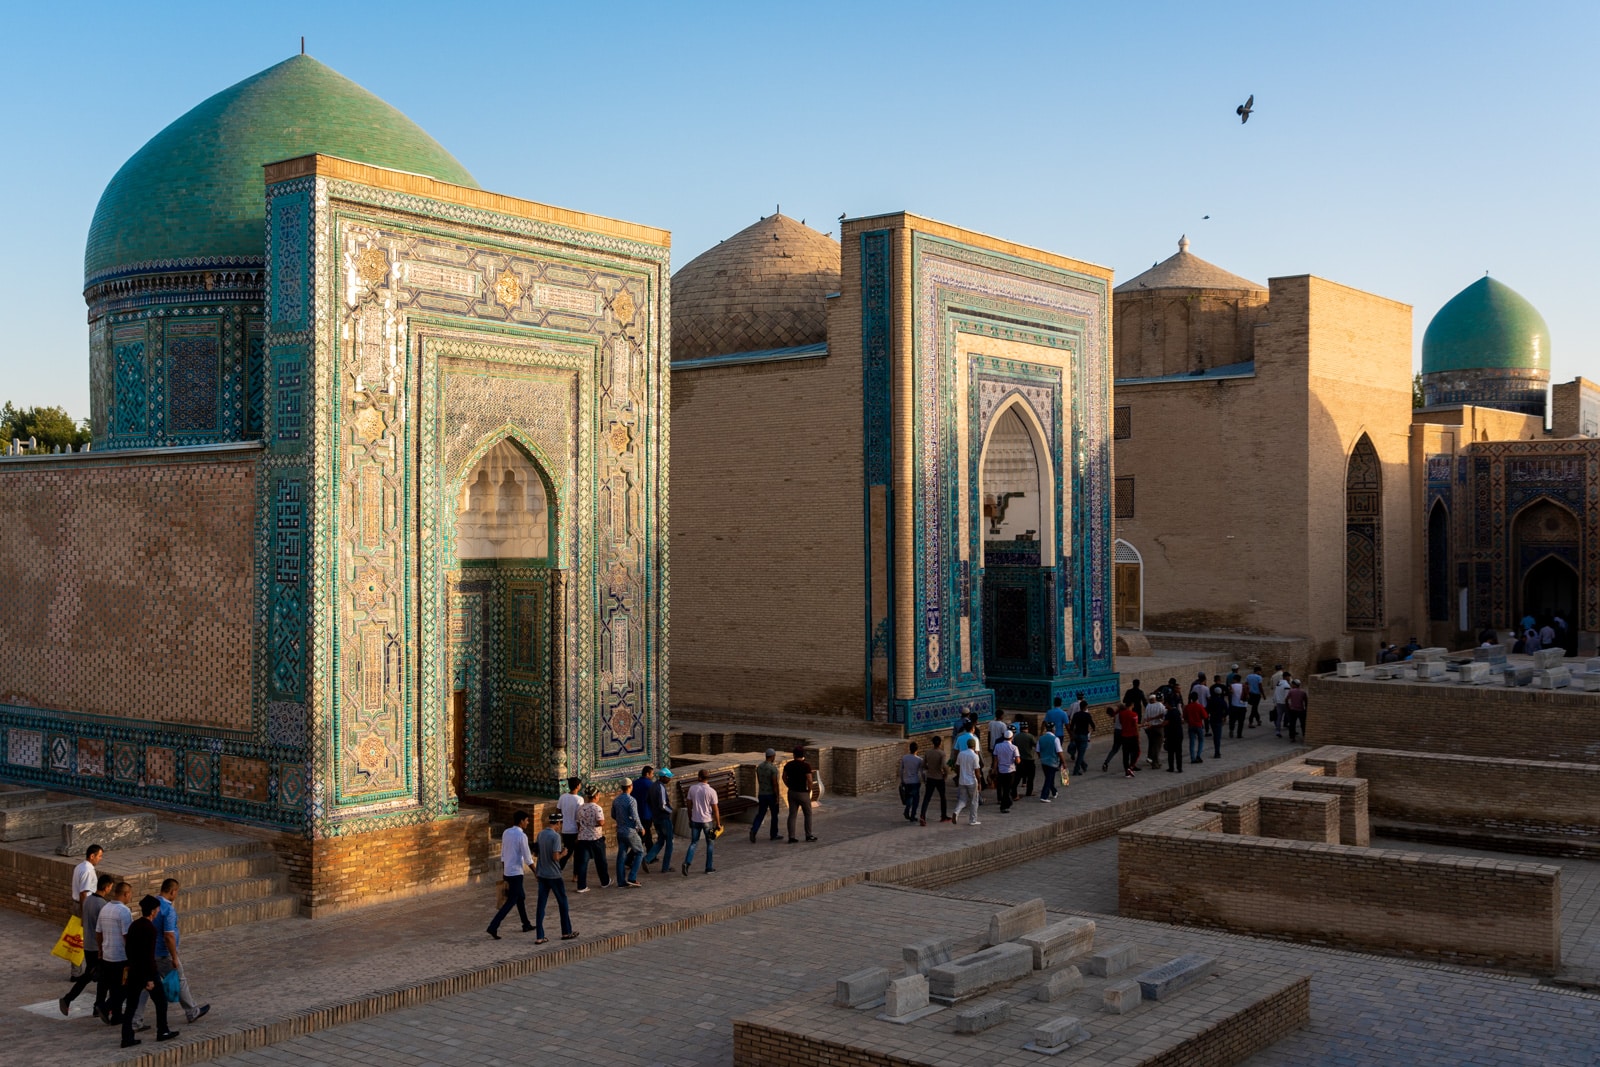 Men exiting the Shah i Zinda necropolis in Samarkand, Uzbekistan during Eid